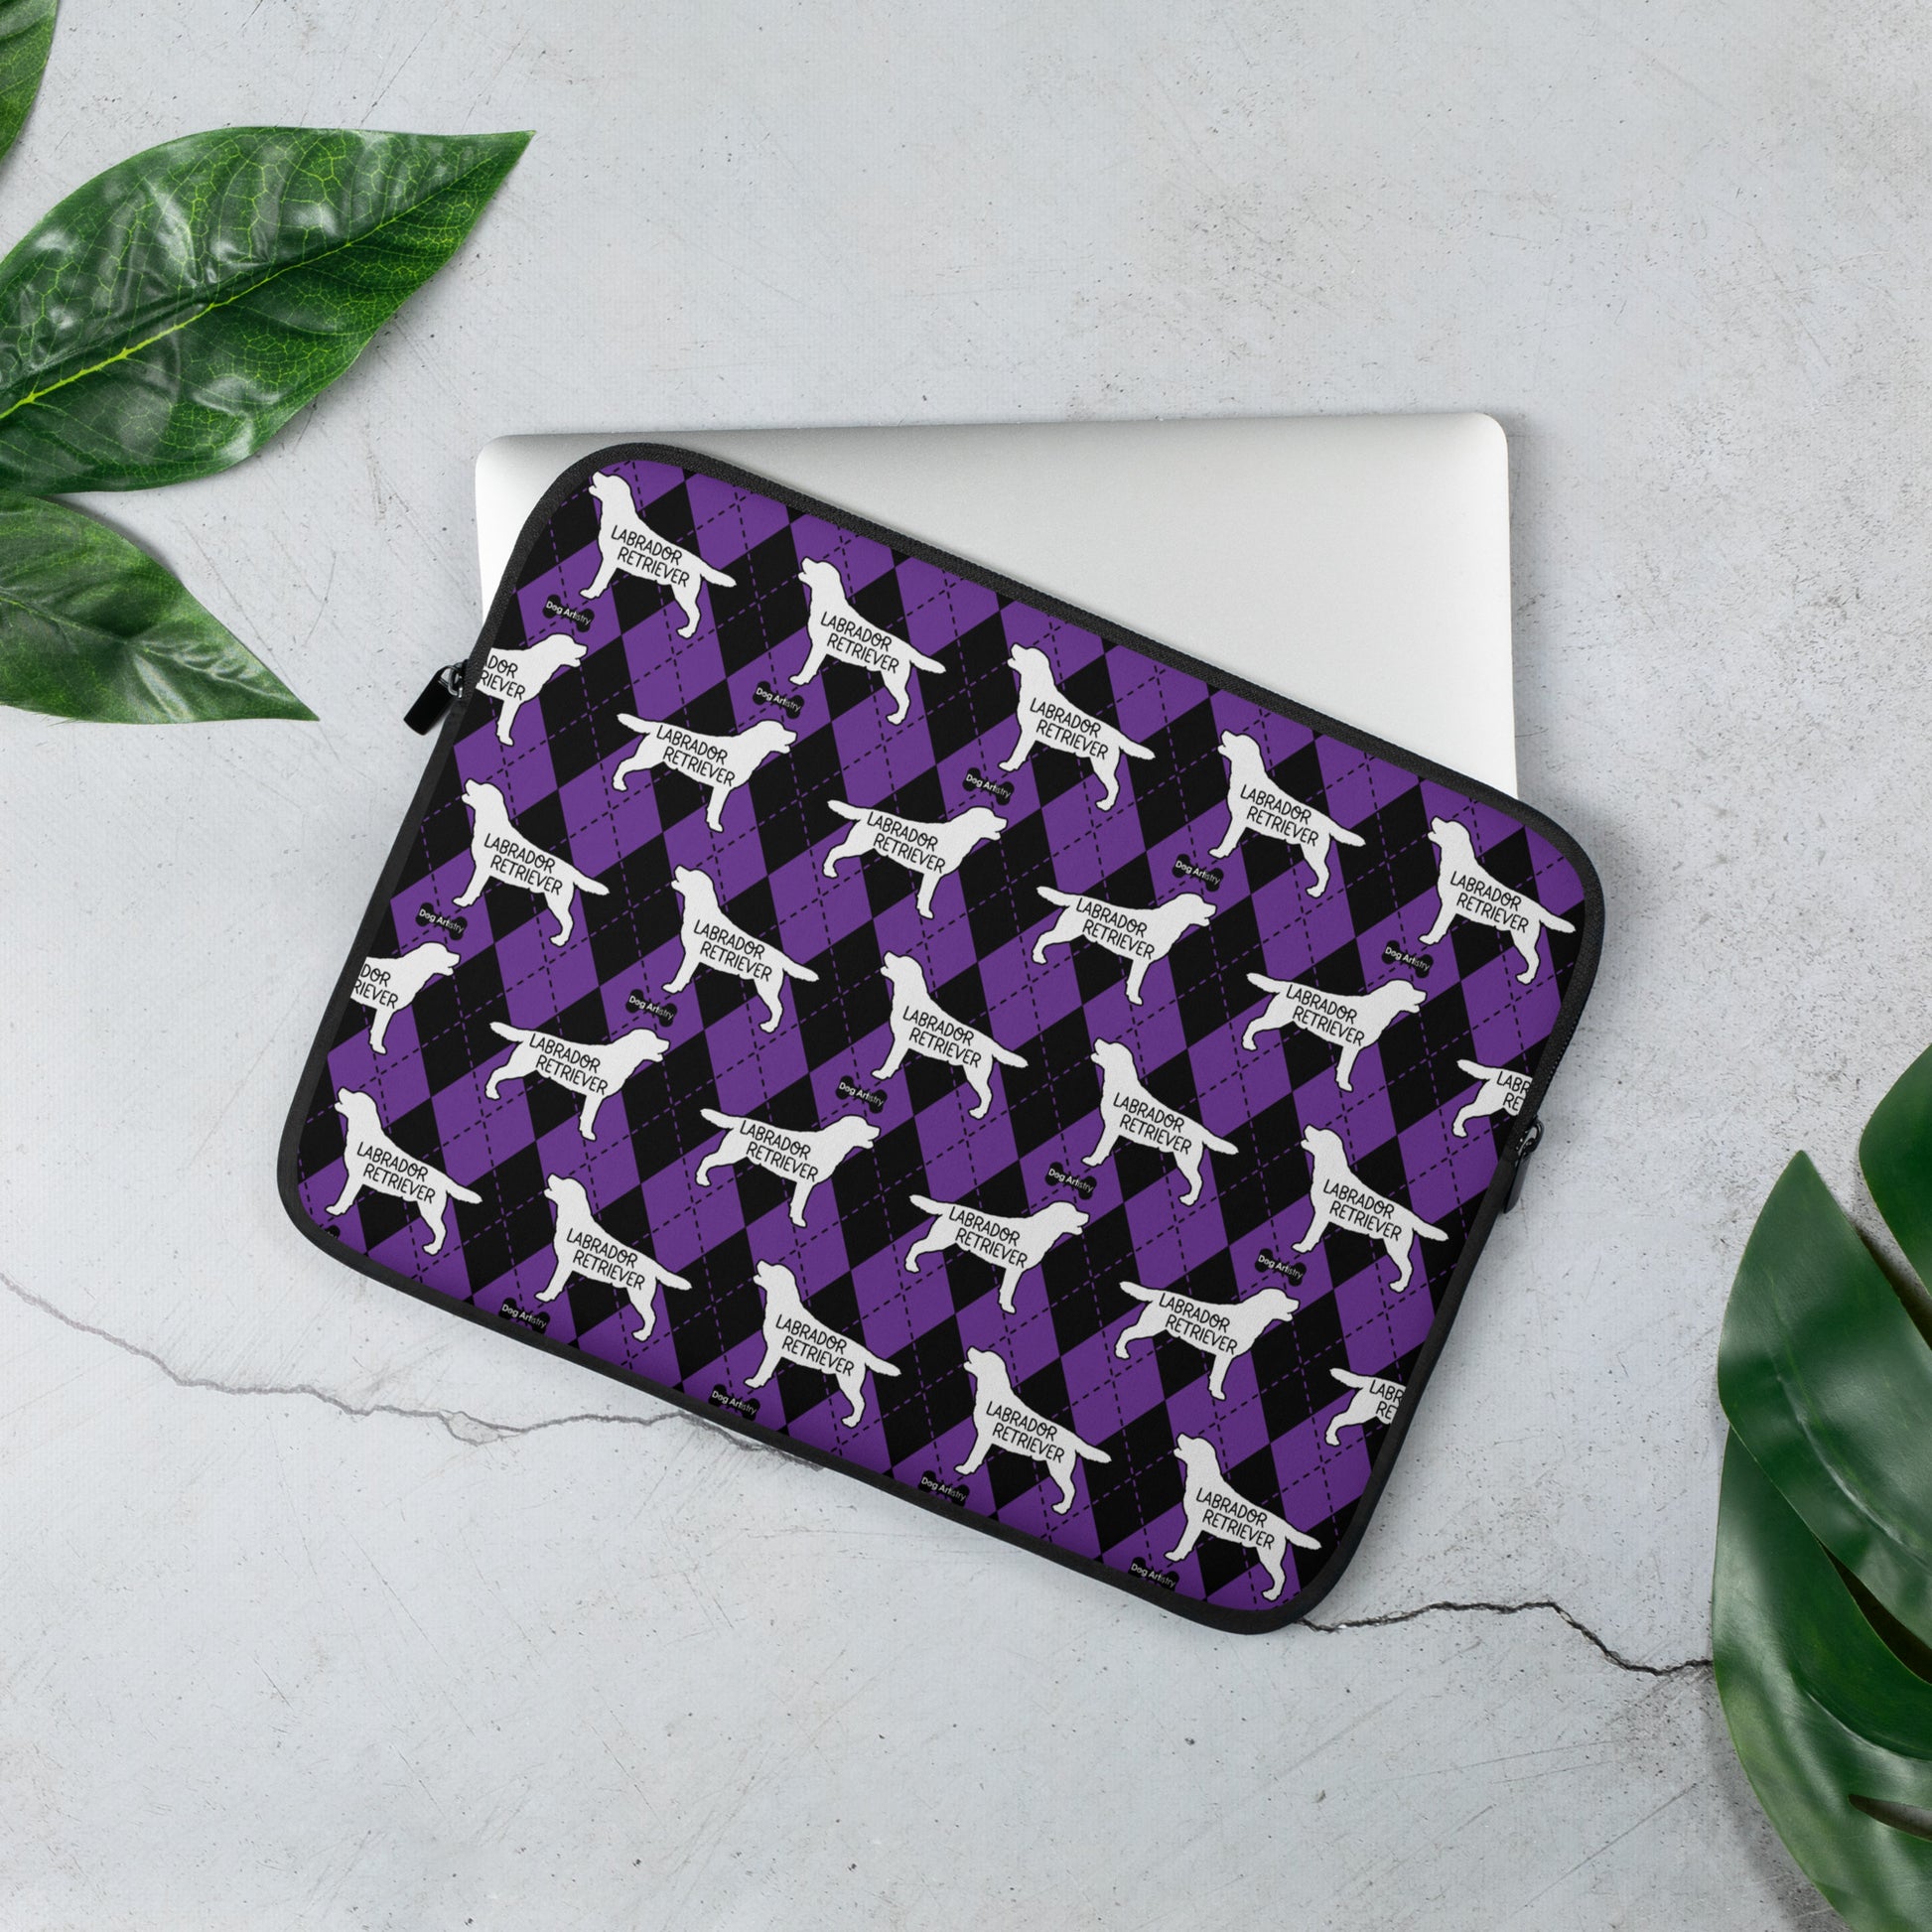 Labrador Retriever purple and black argyle laptop sleeve by Dog Artistry